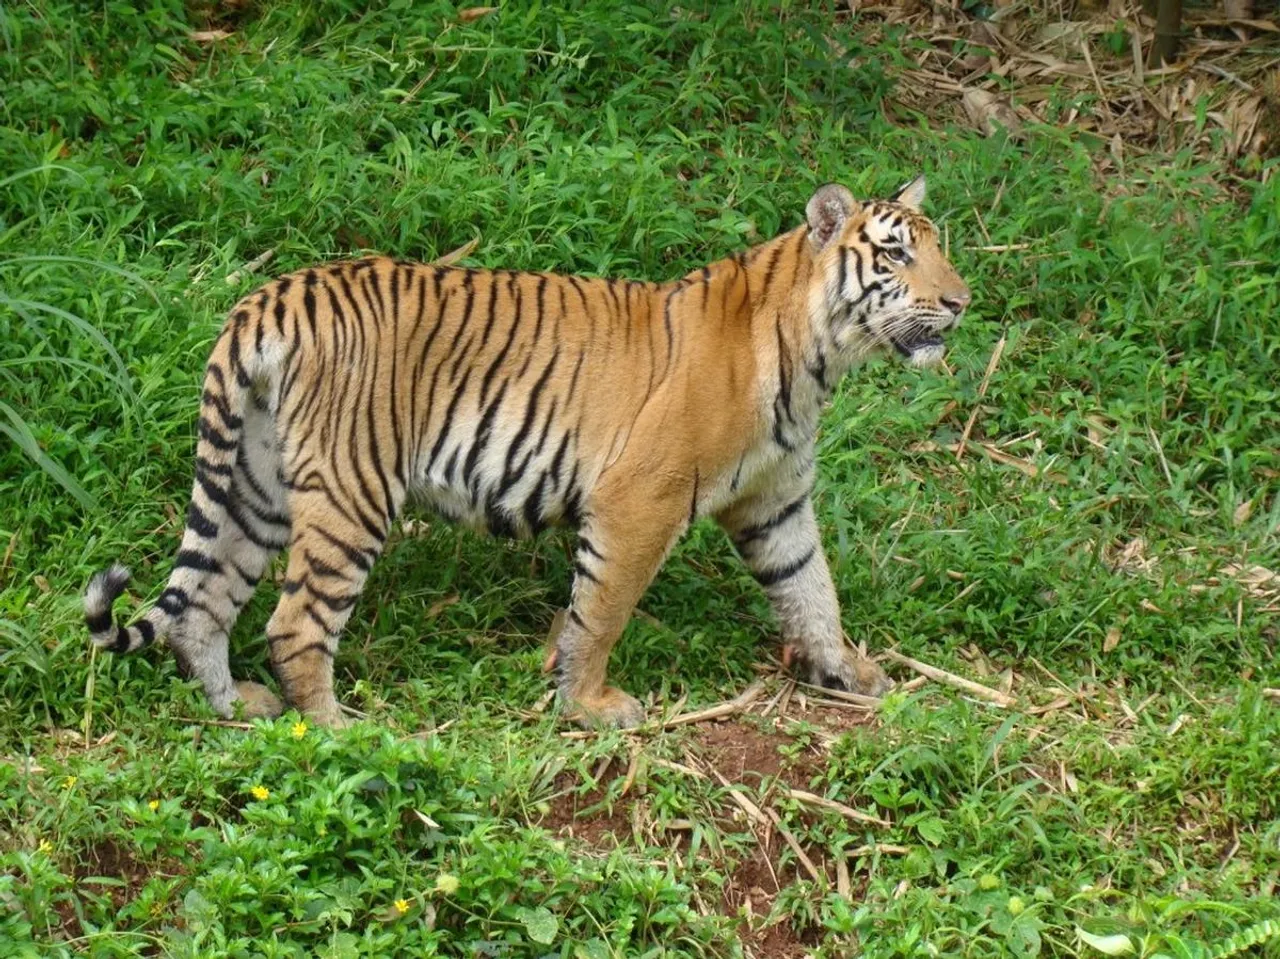 Tigress dies of old age in Madhya Pradesh's Kanha Tiger Reserve